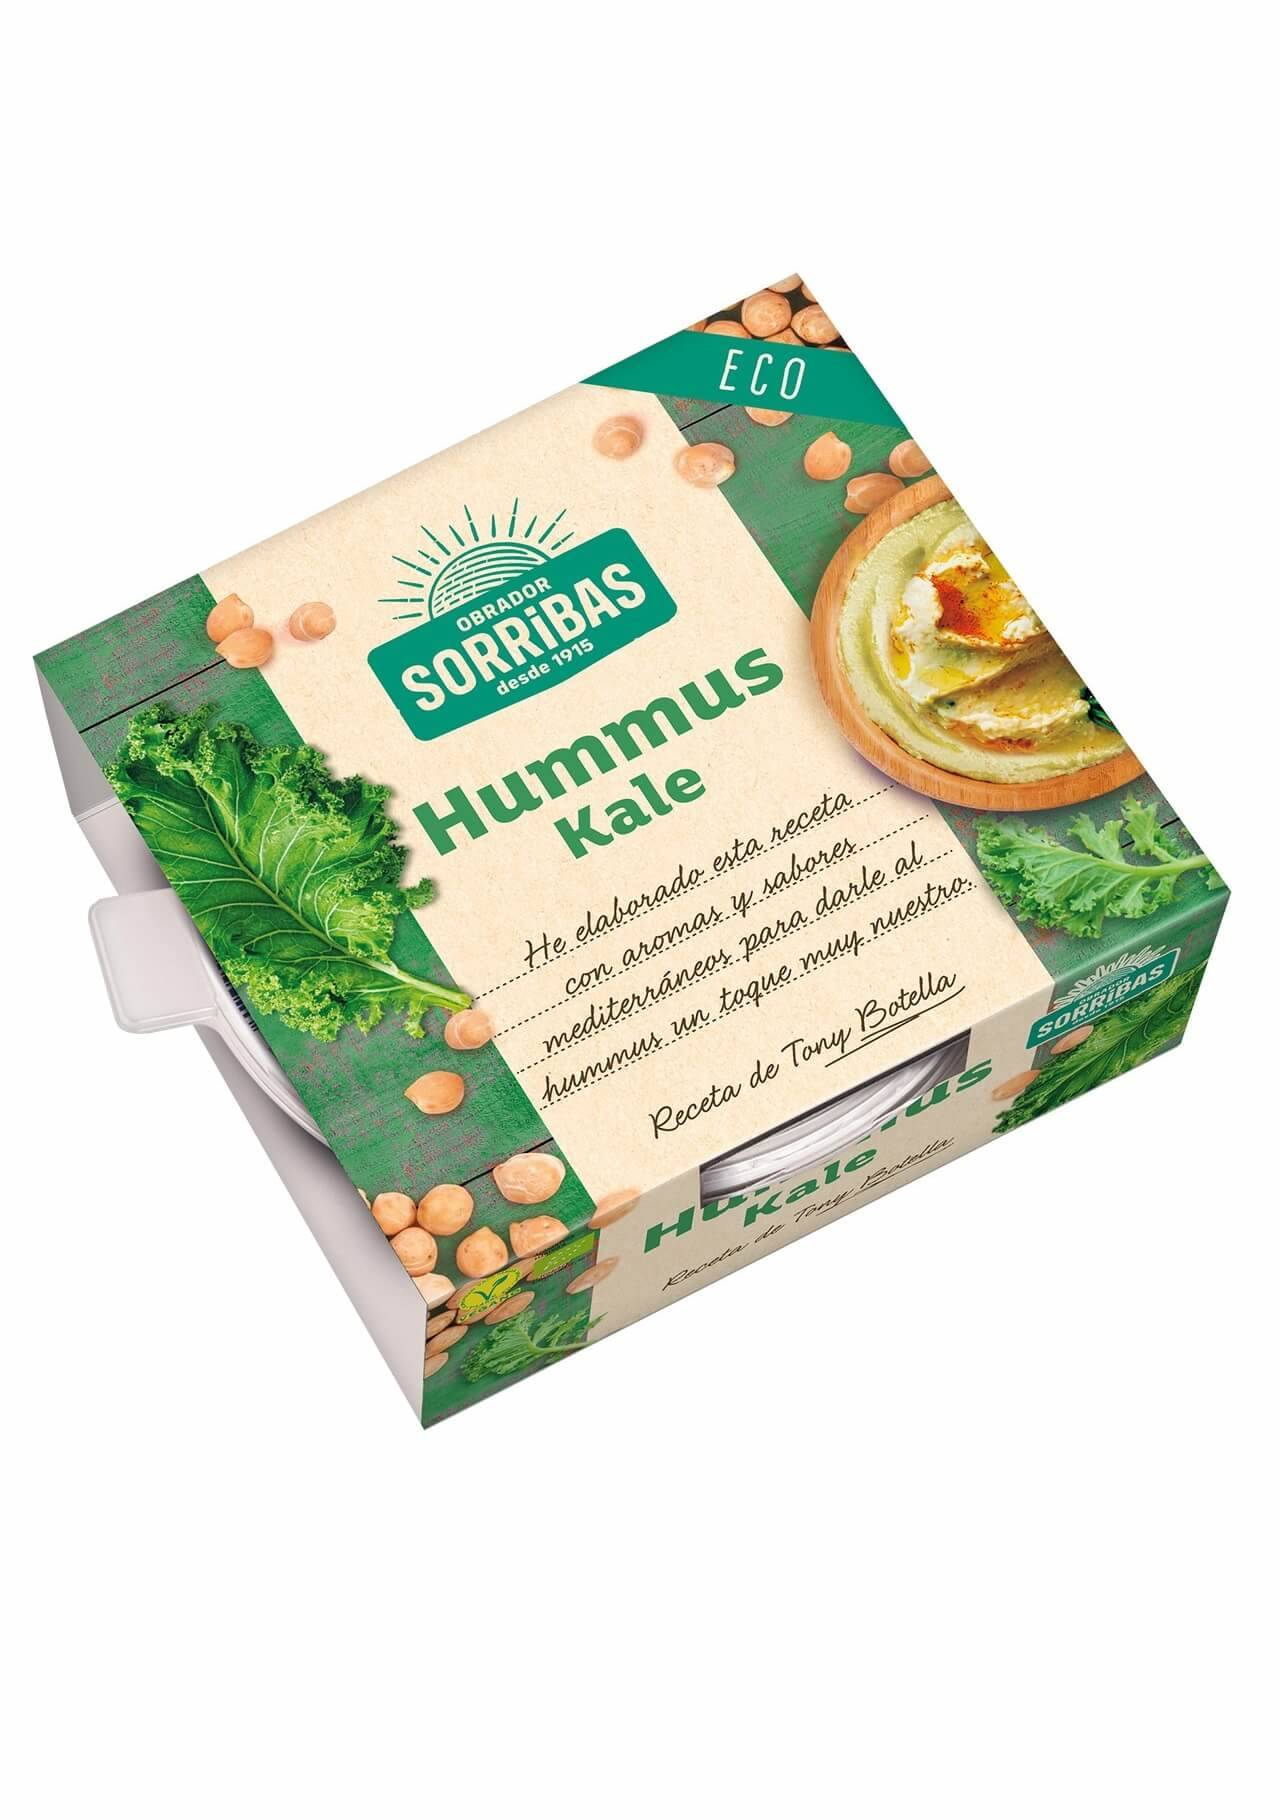 Hummus mercadona kale El Corte Inglés, 3,42€